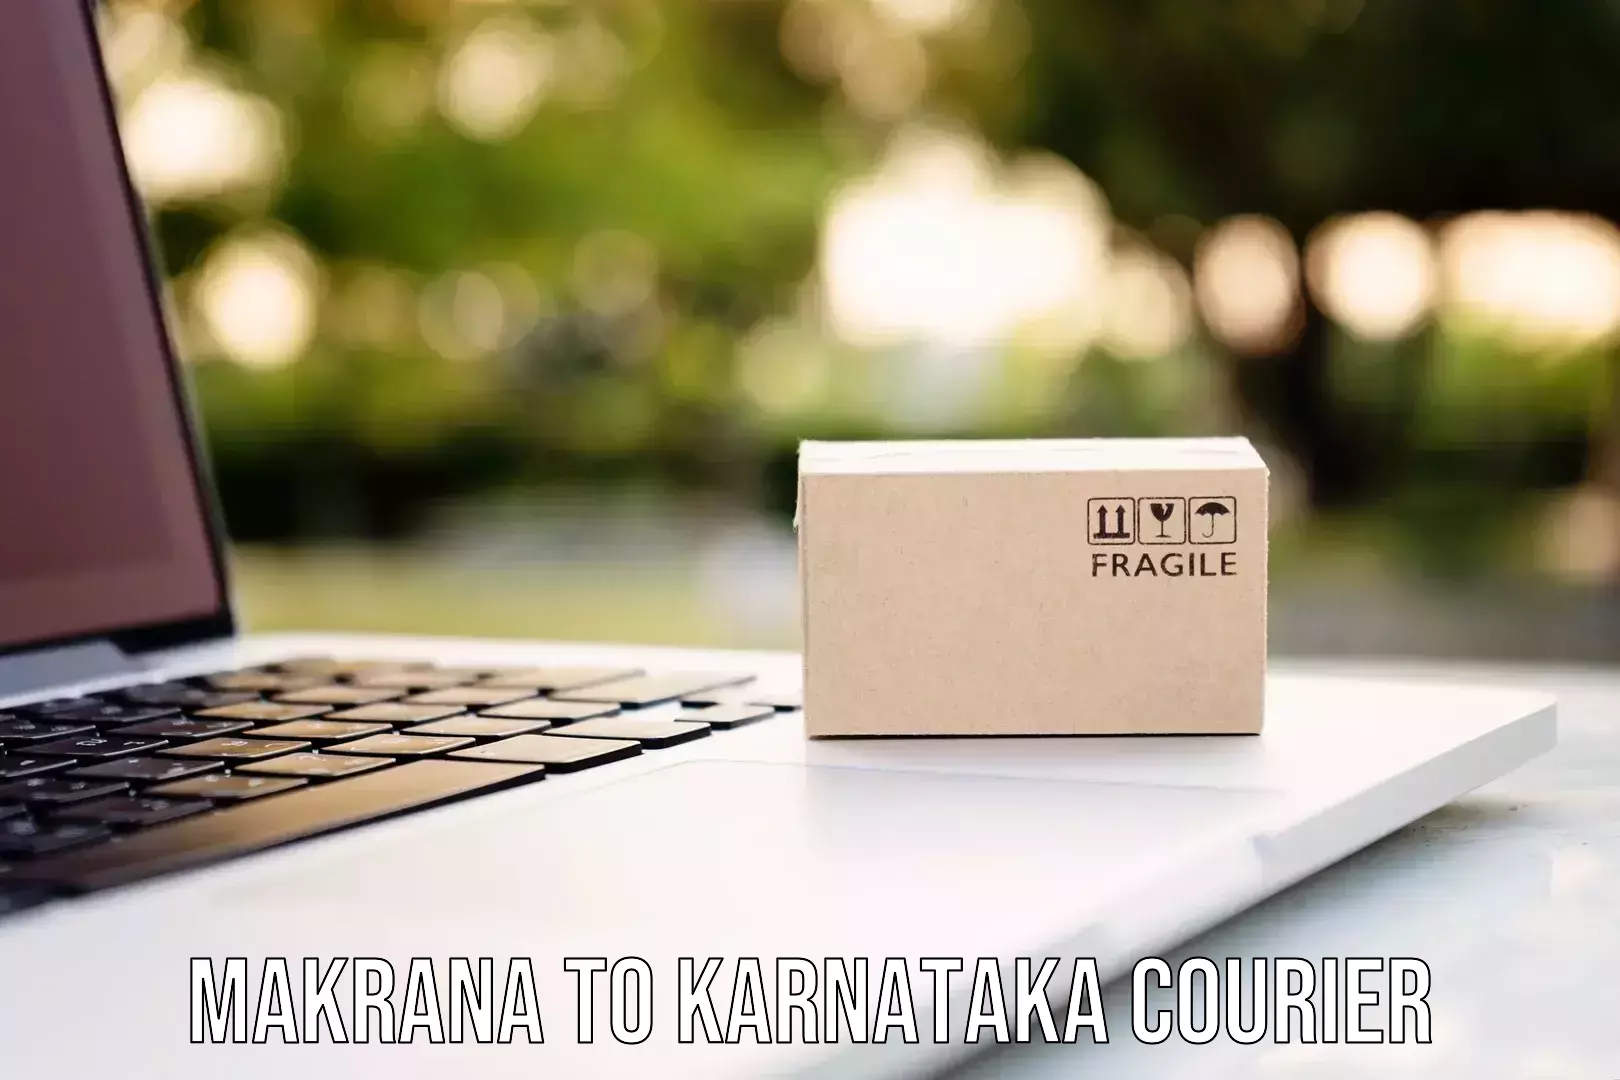 State-of-the-art courier technology Makrana to Kundapura